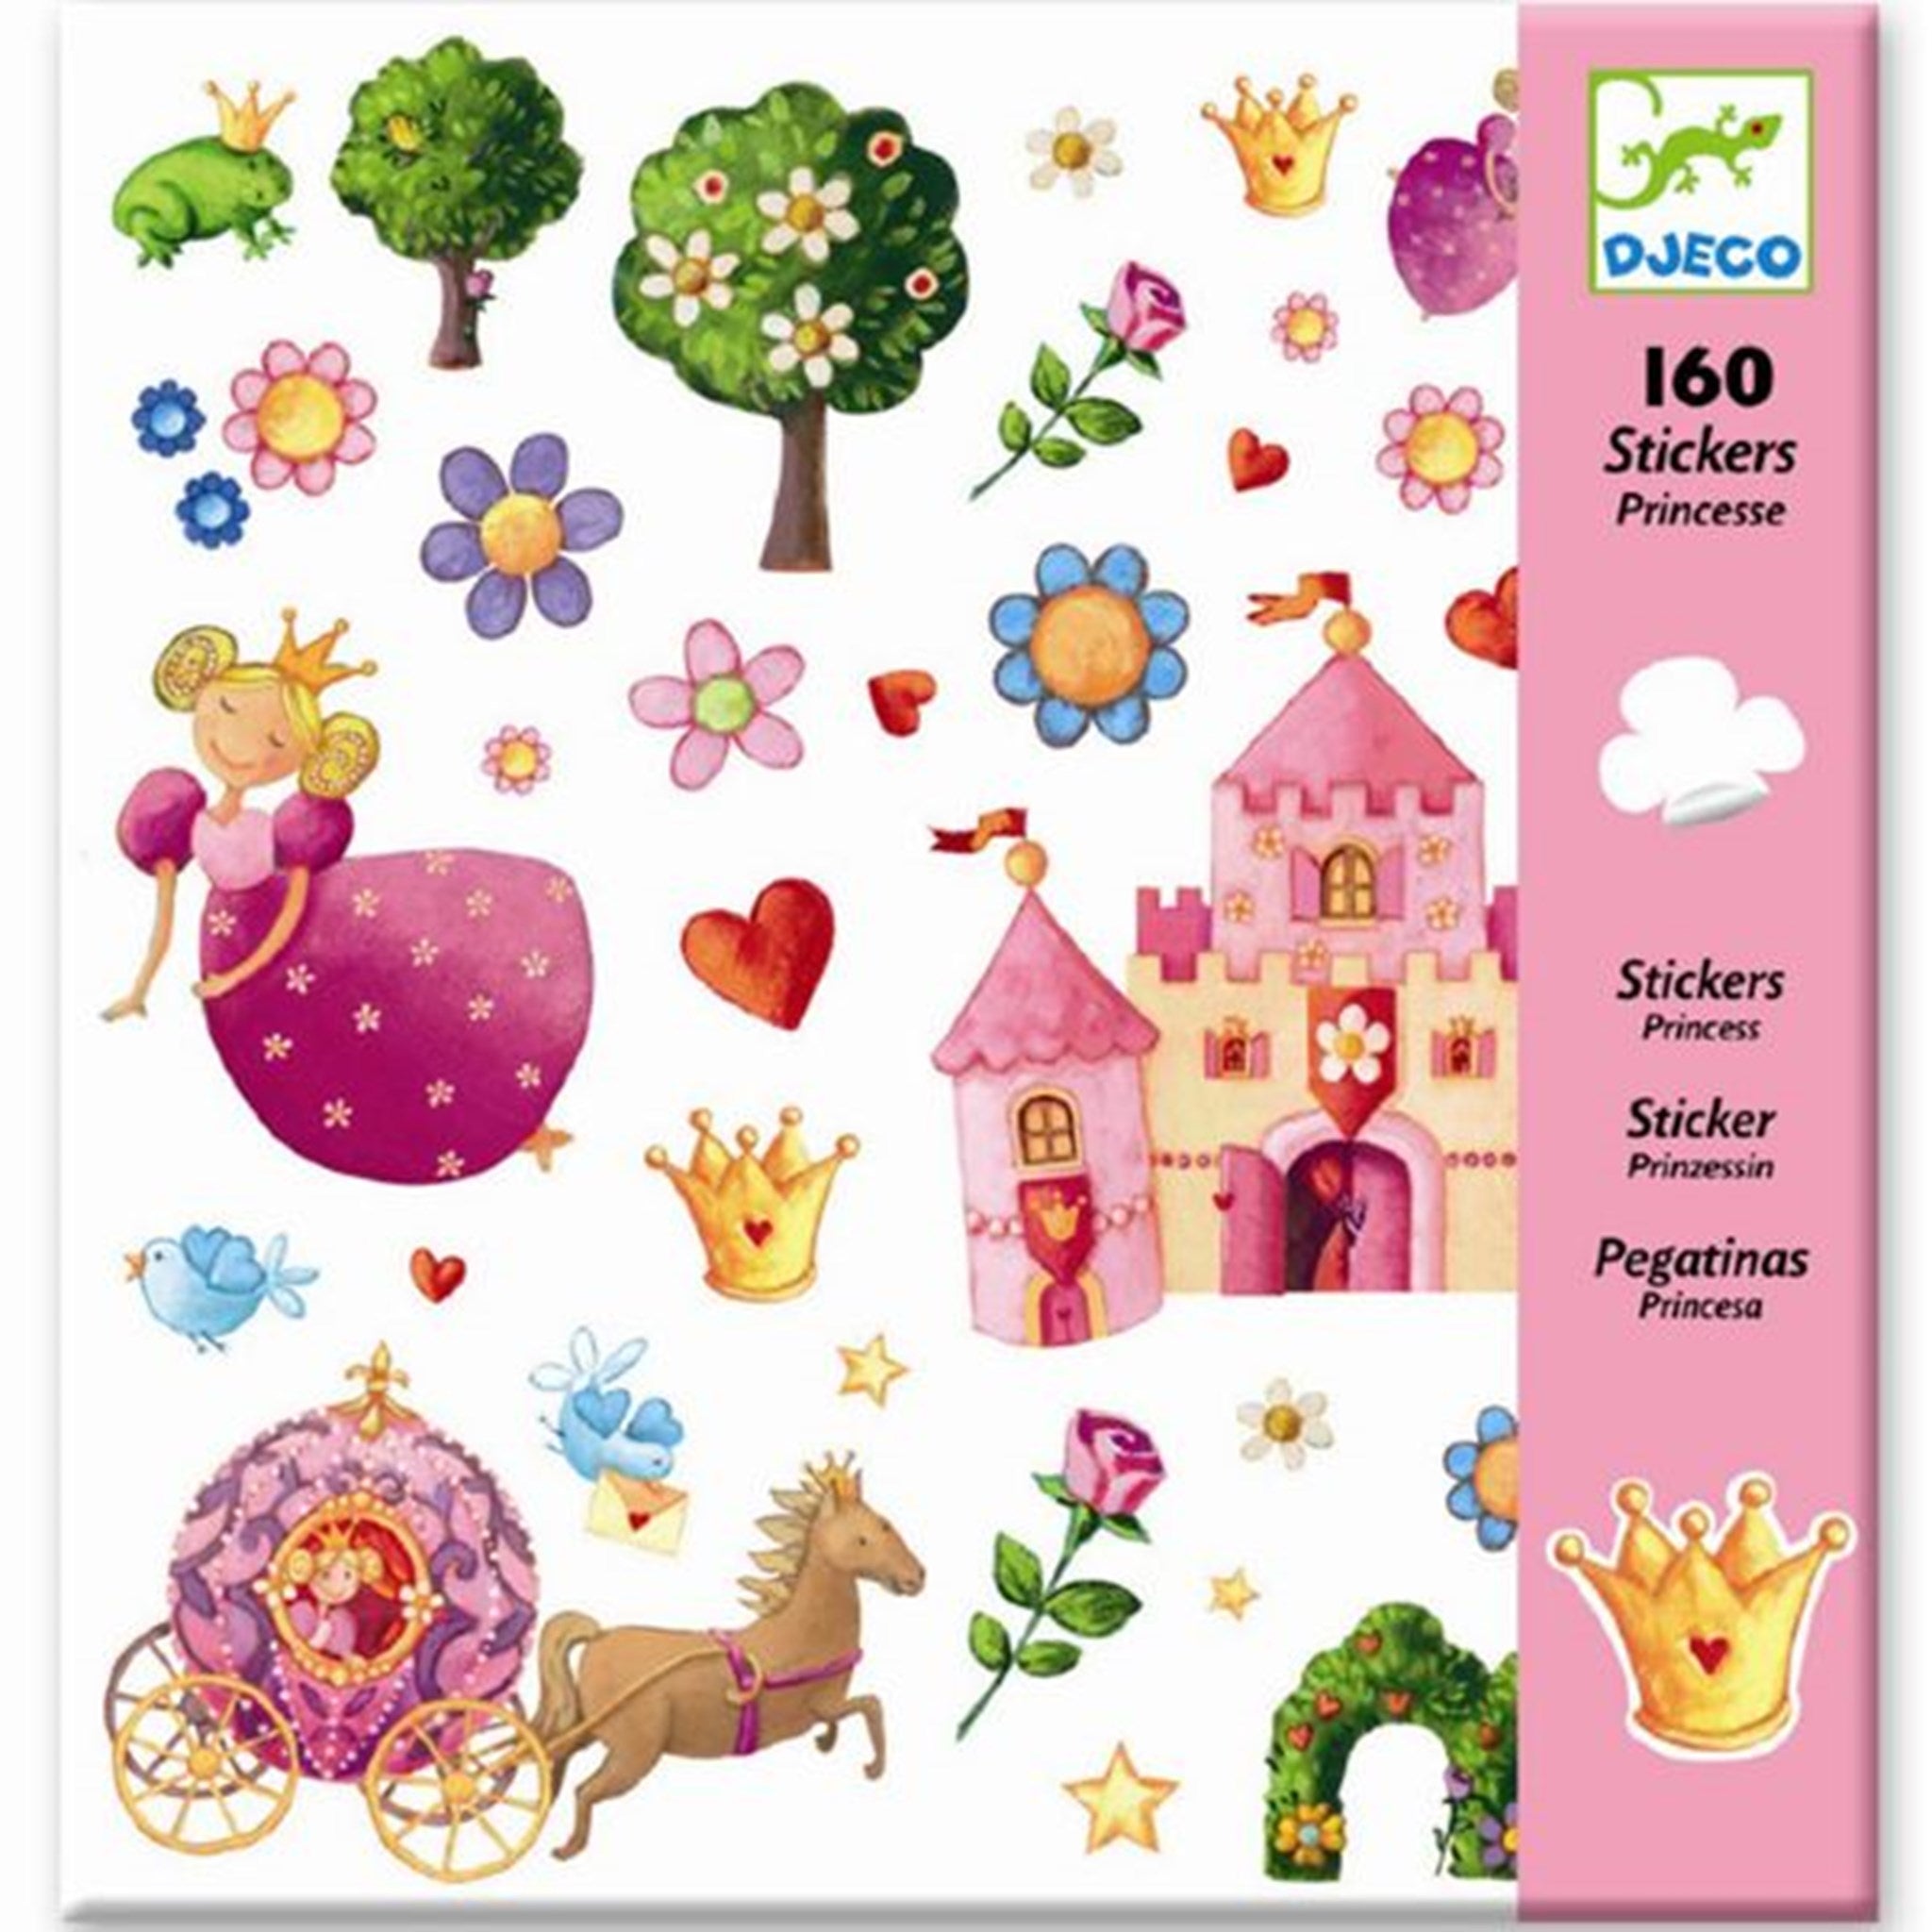 Djeco Stickers Princess Marguerite